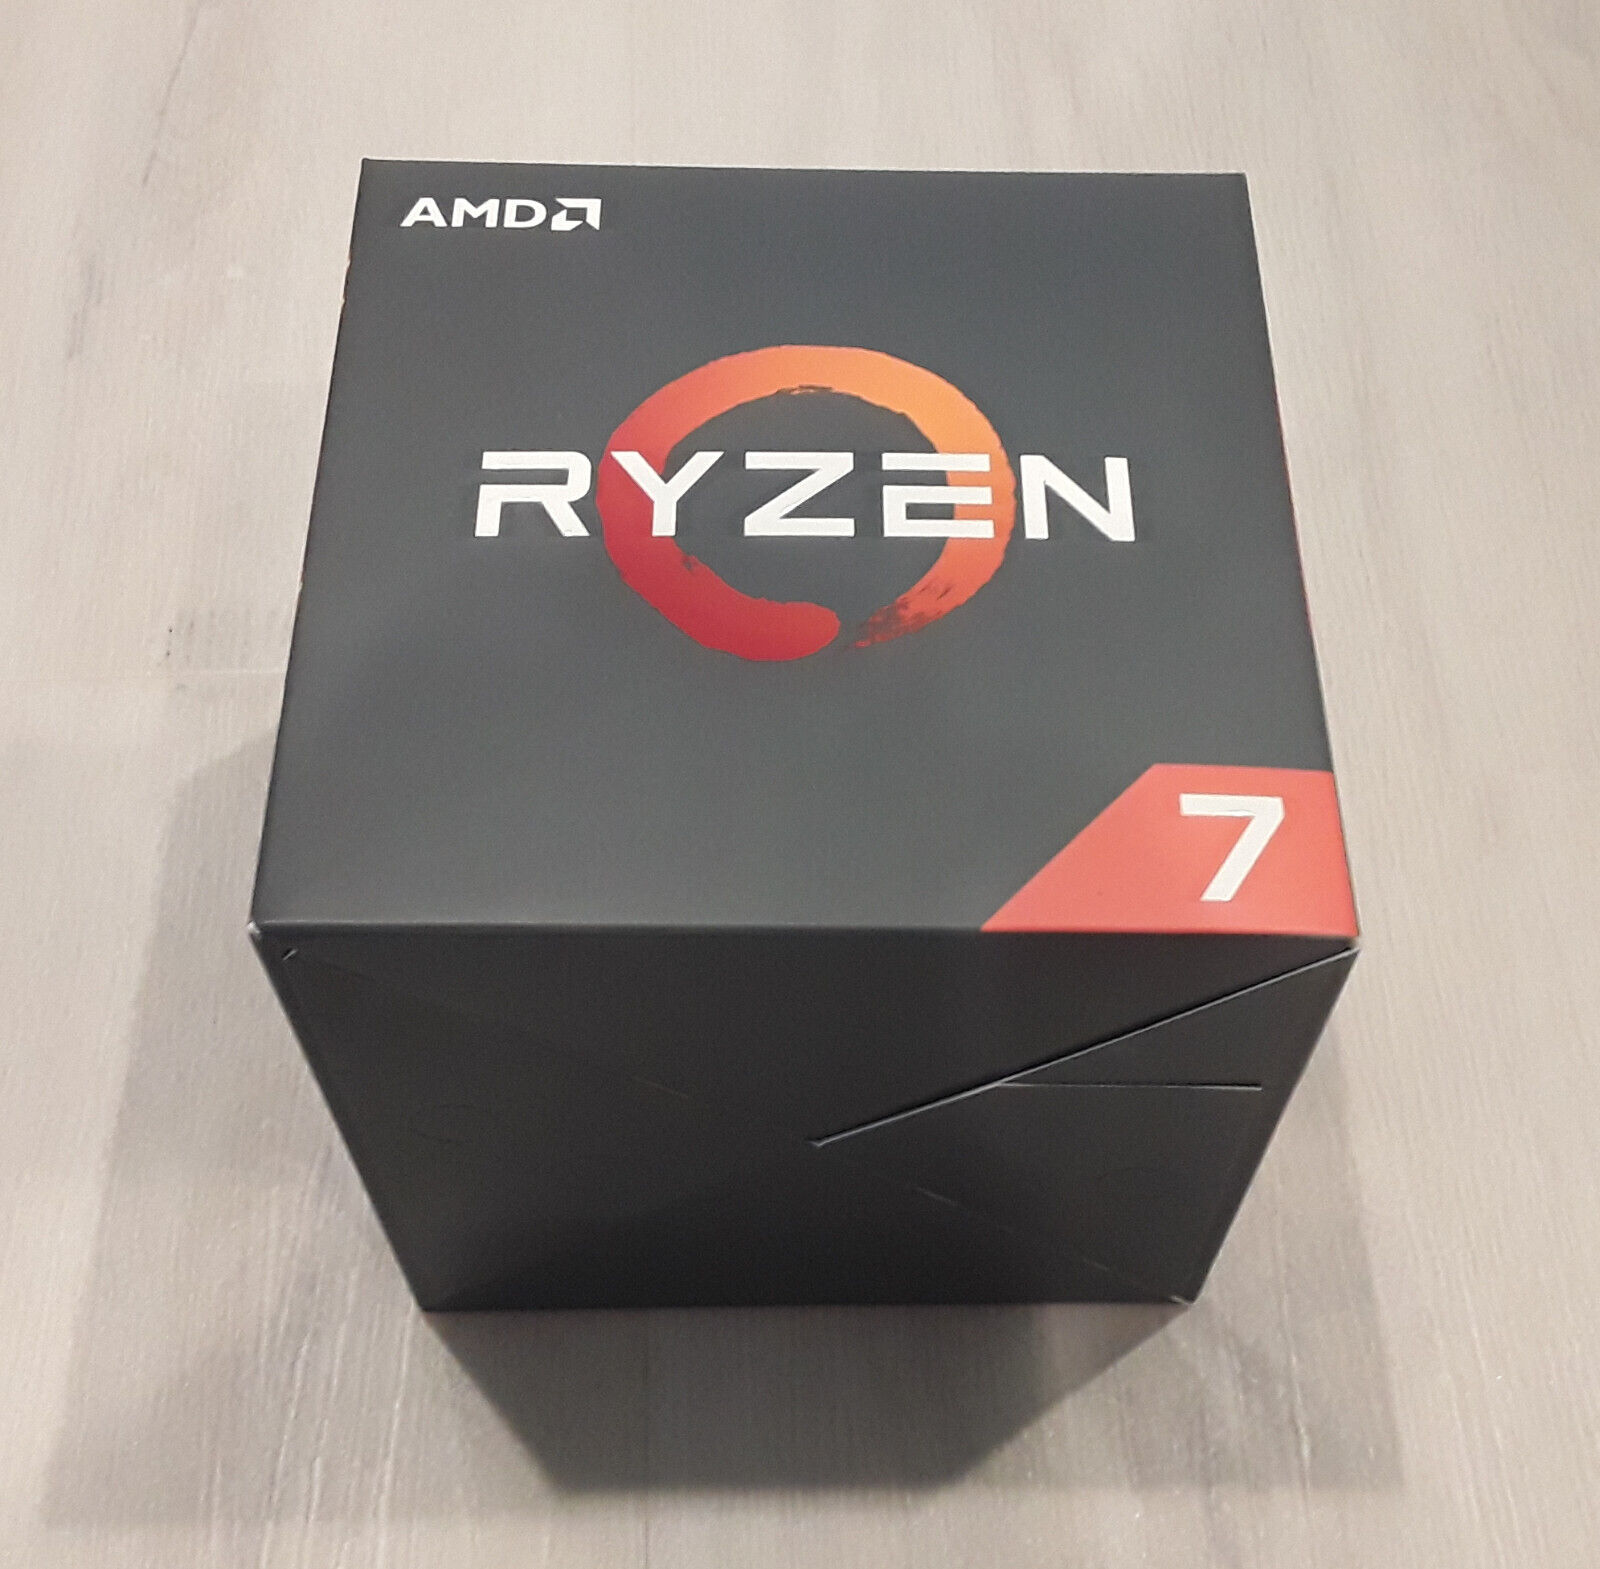 AMD Ryzen 7 2700X Processor EMPTY BOX (3.7 GHz, 8 Cores, Socket AM4) NO CPU, FAN